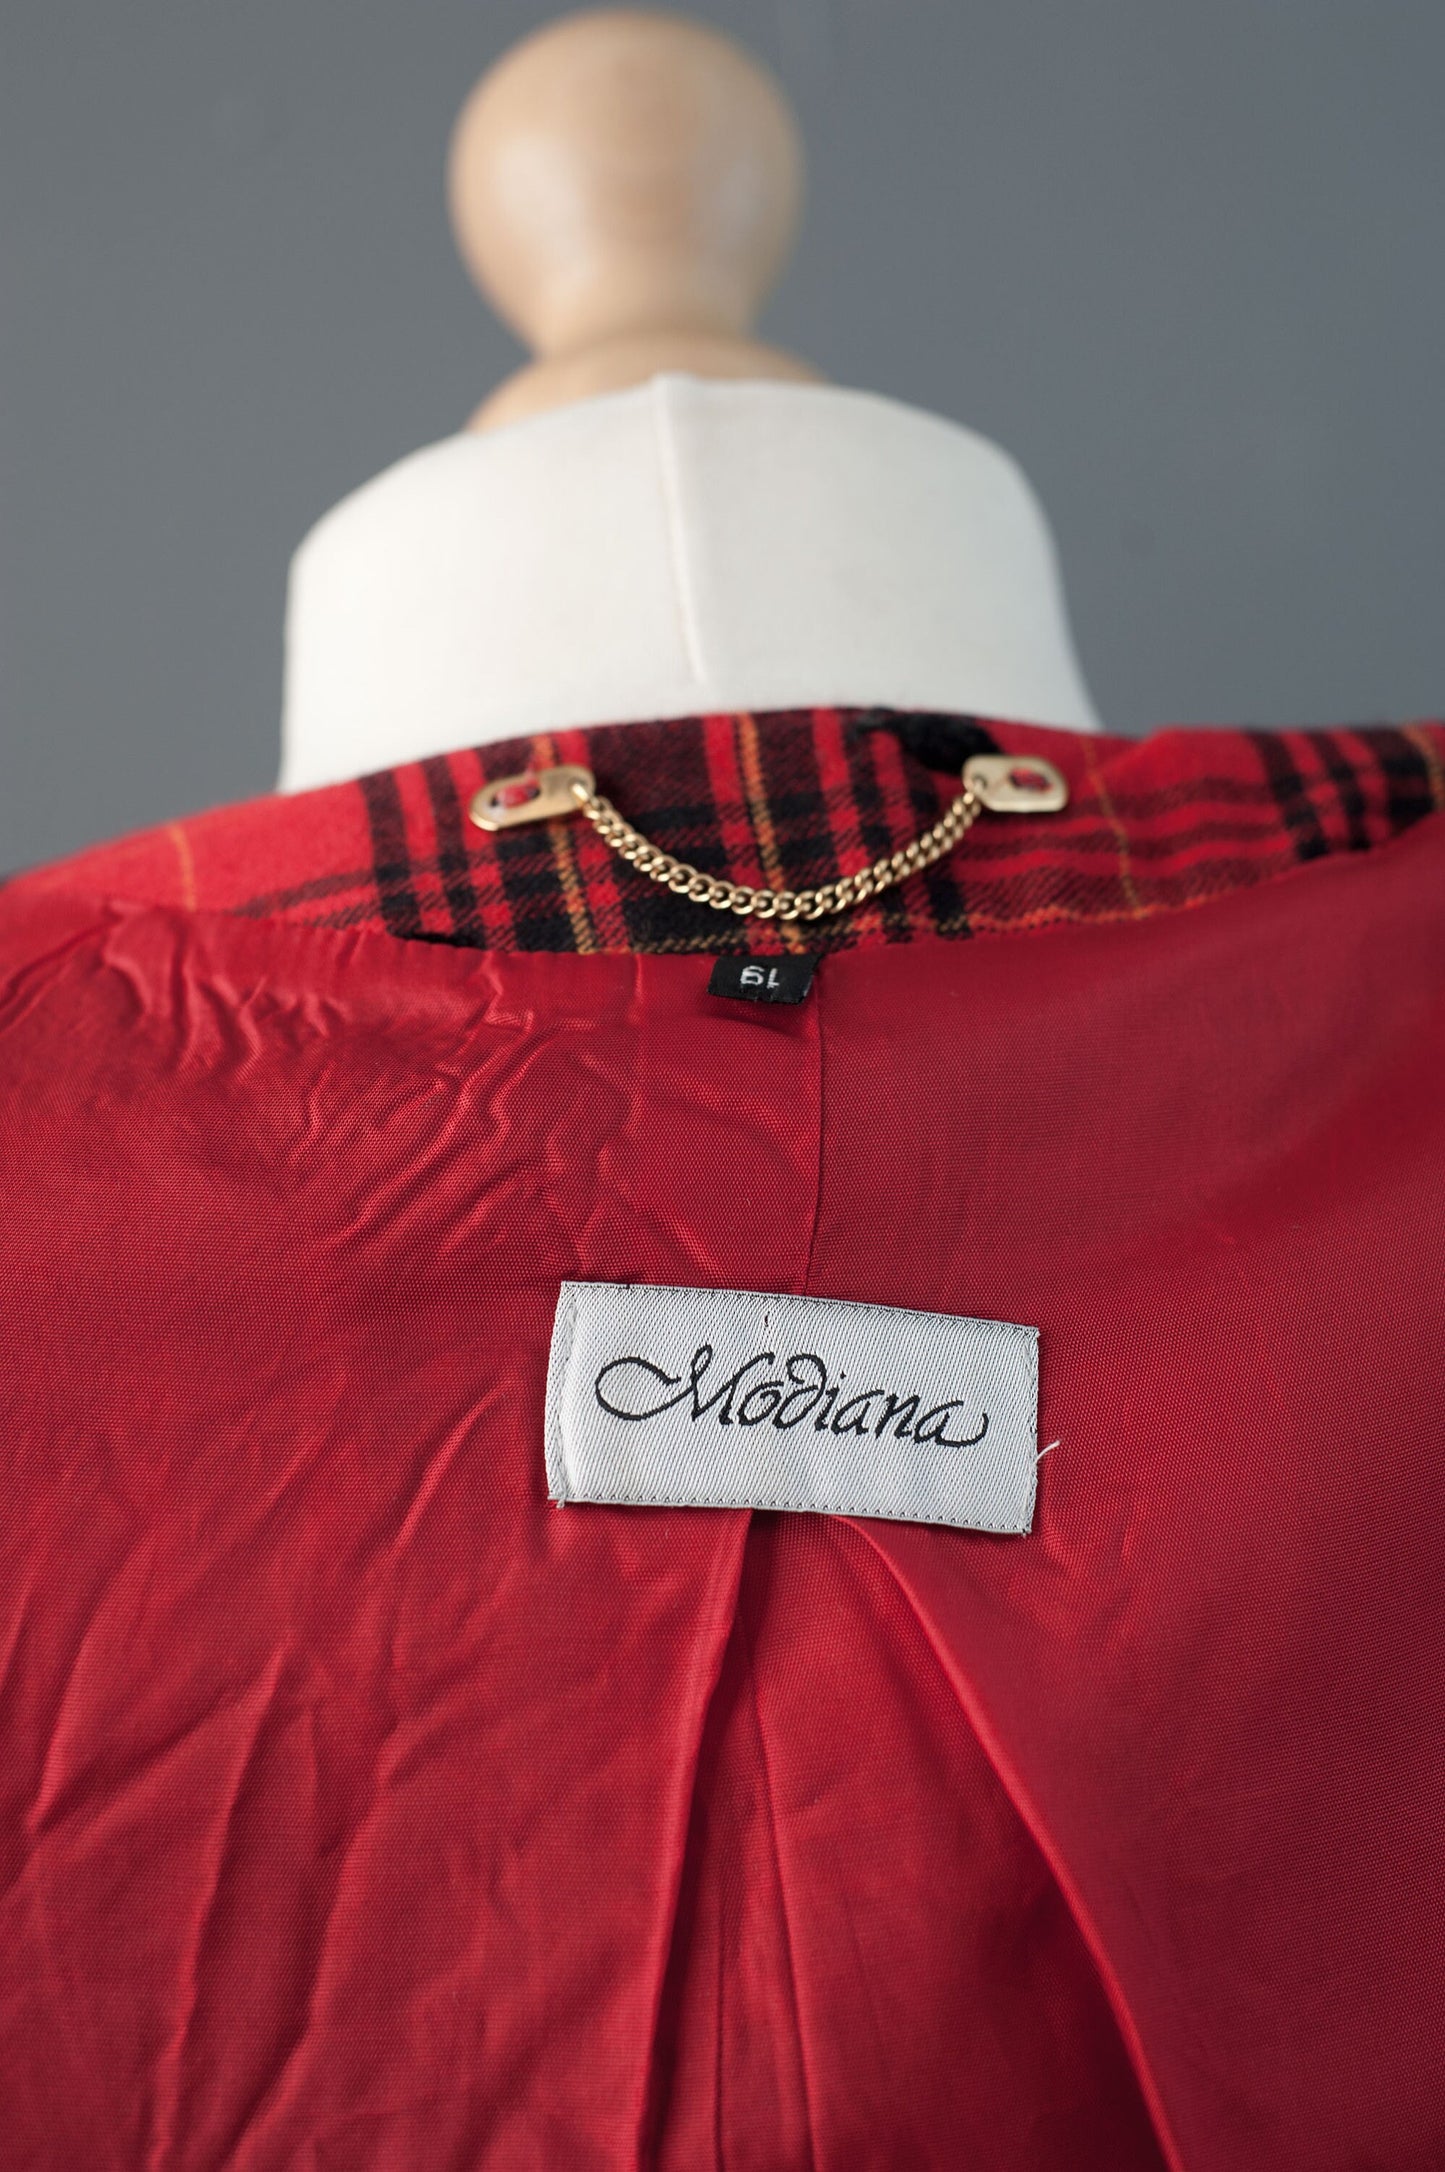 80s Tartan Check Blazer with Velvet Leaves, Modiana Wool Blend Boxy Collarless Jacket, Size Medium